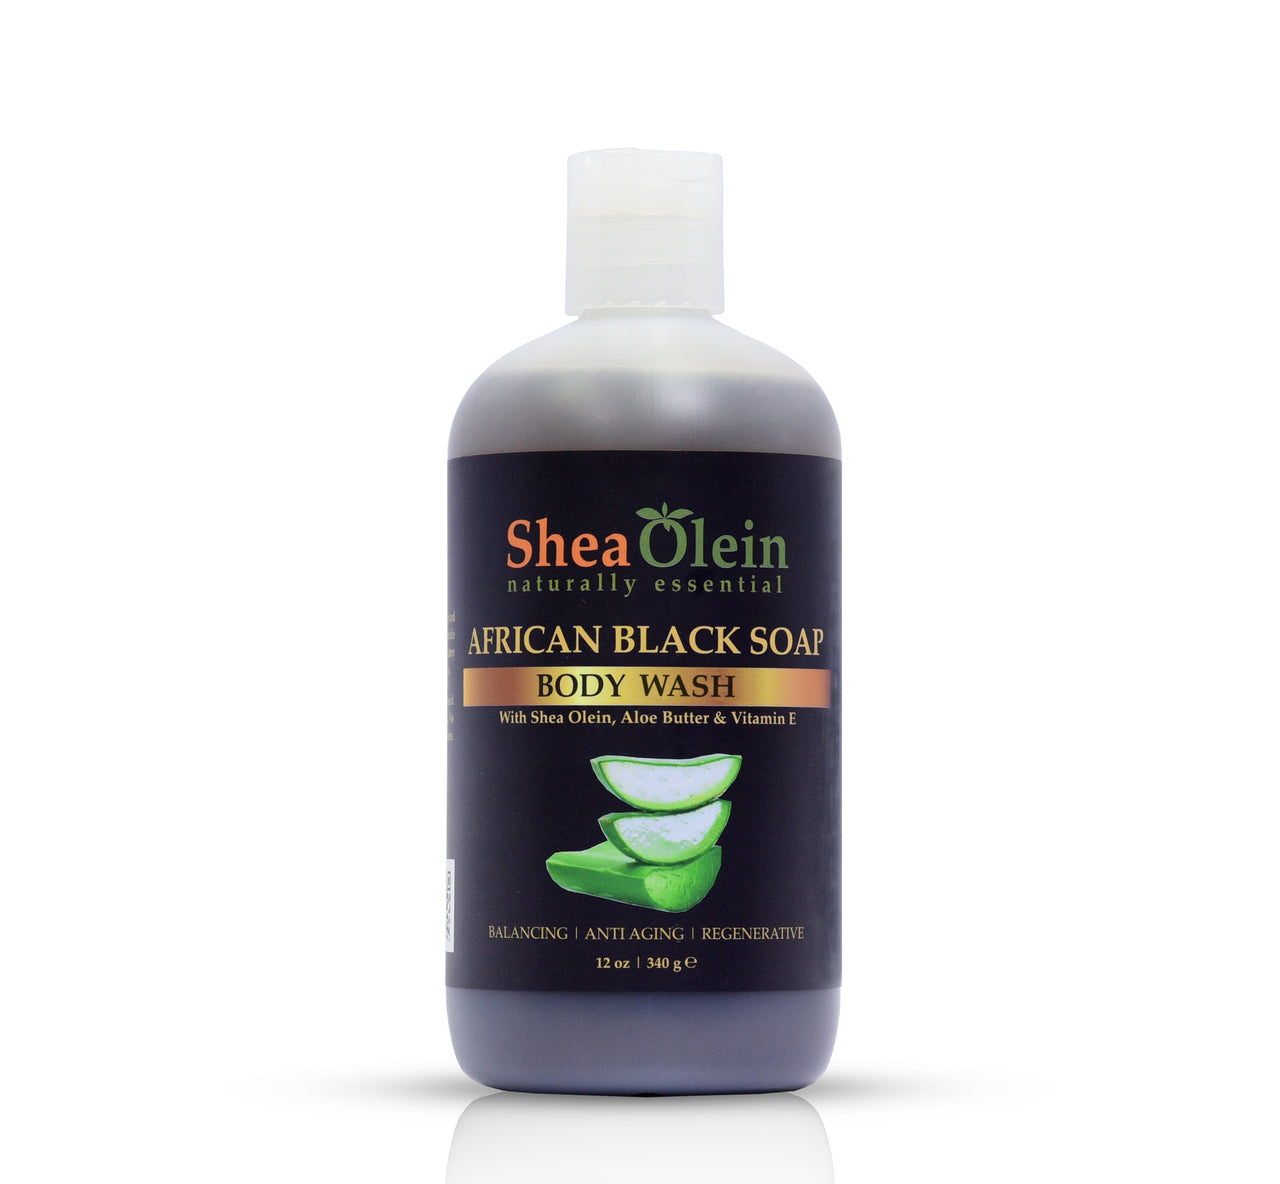 African Black Soap Body Wash with Shea Olein, Aloe Butter & Vitamin E 12oz